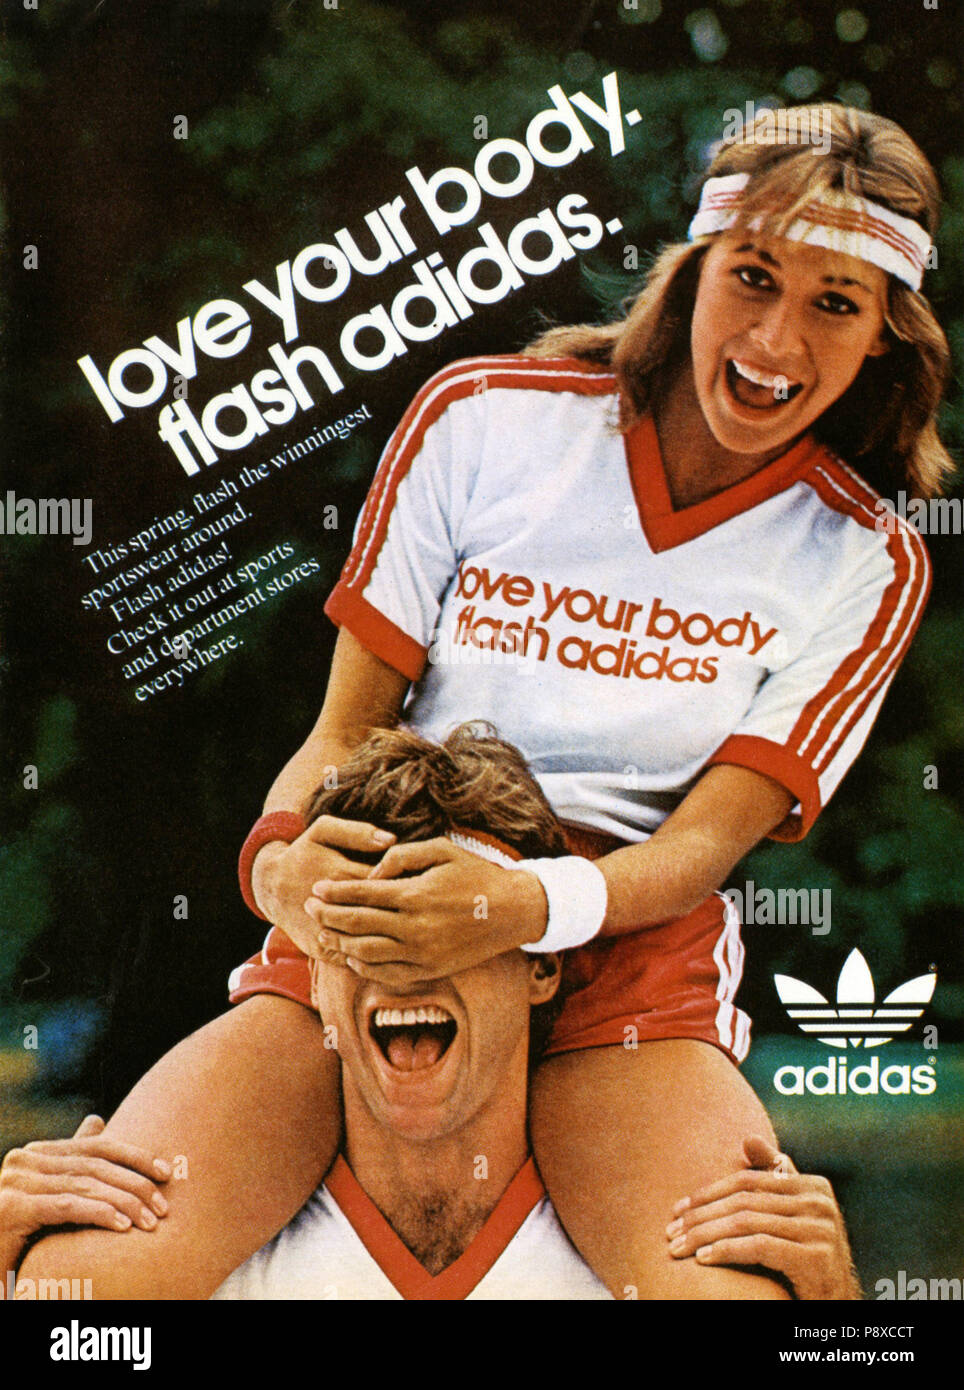 1980s USA Adidas Magazine Advert Stock Photo - Alamy